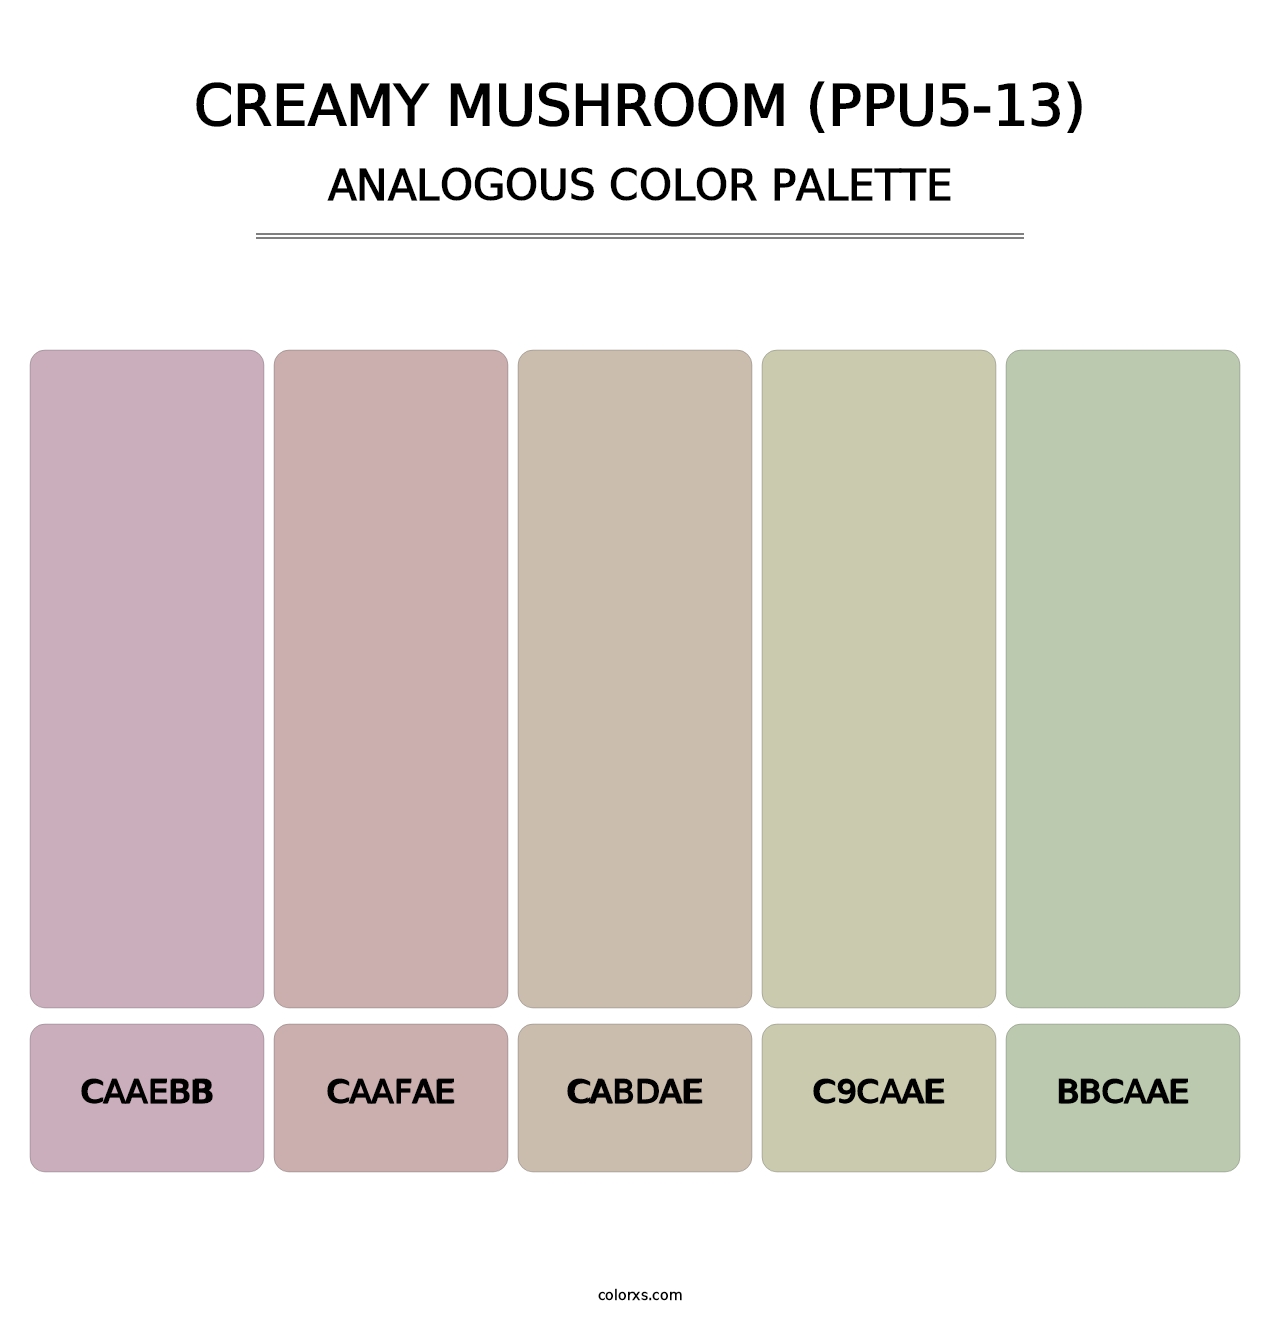 Creamy Mushroom (PPU5-13) - Analogous Color Palette